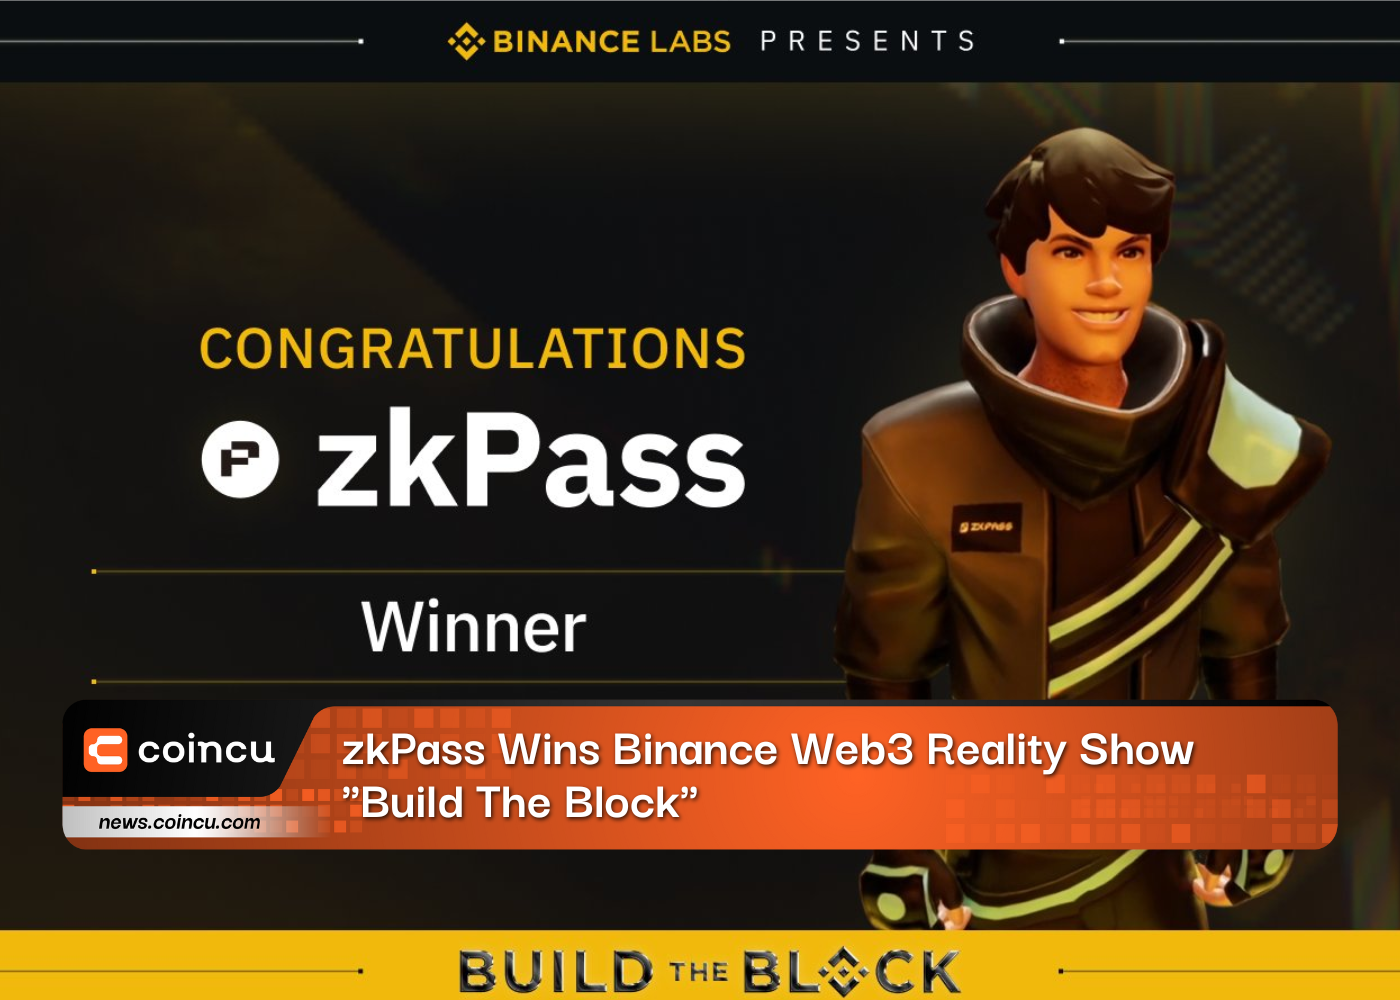 zkPass Wins Binance Web3 Reality Show "Build The Block"